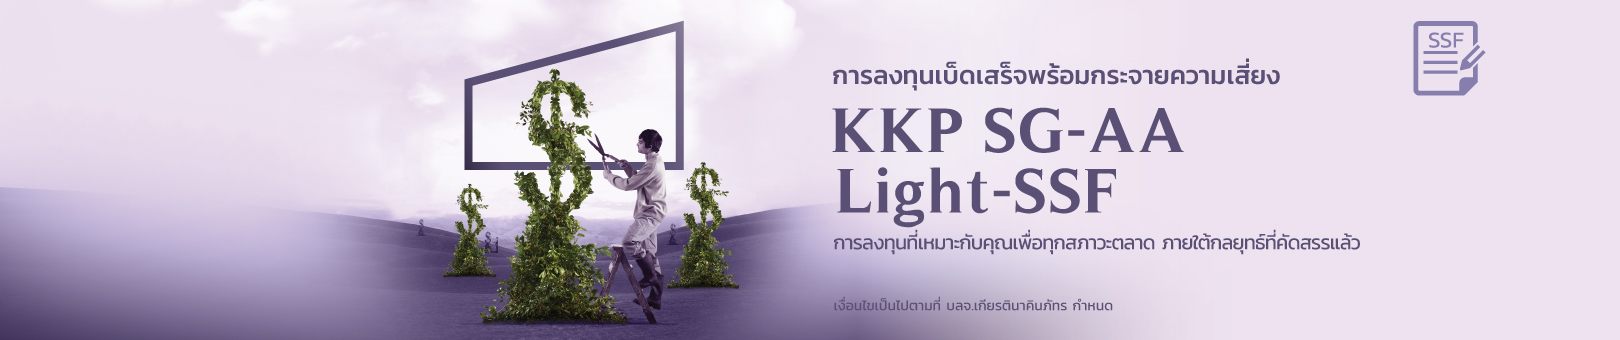 KKP_SG-AA-Light-SSF_1620x340